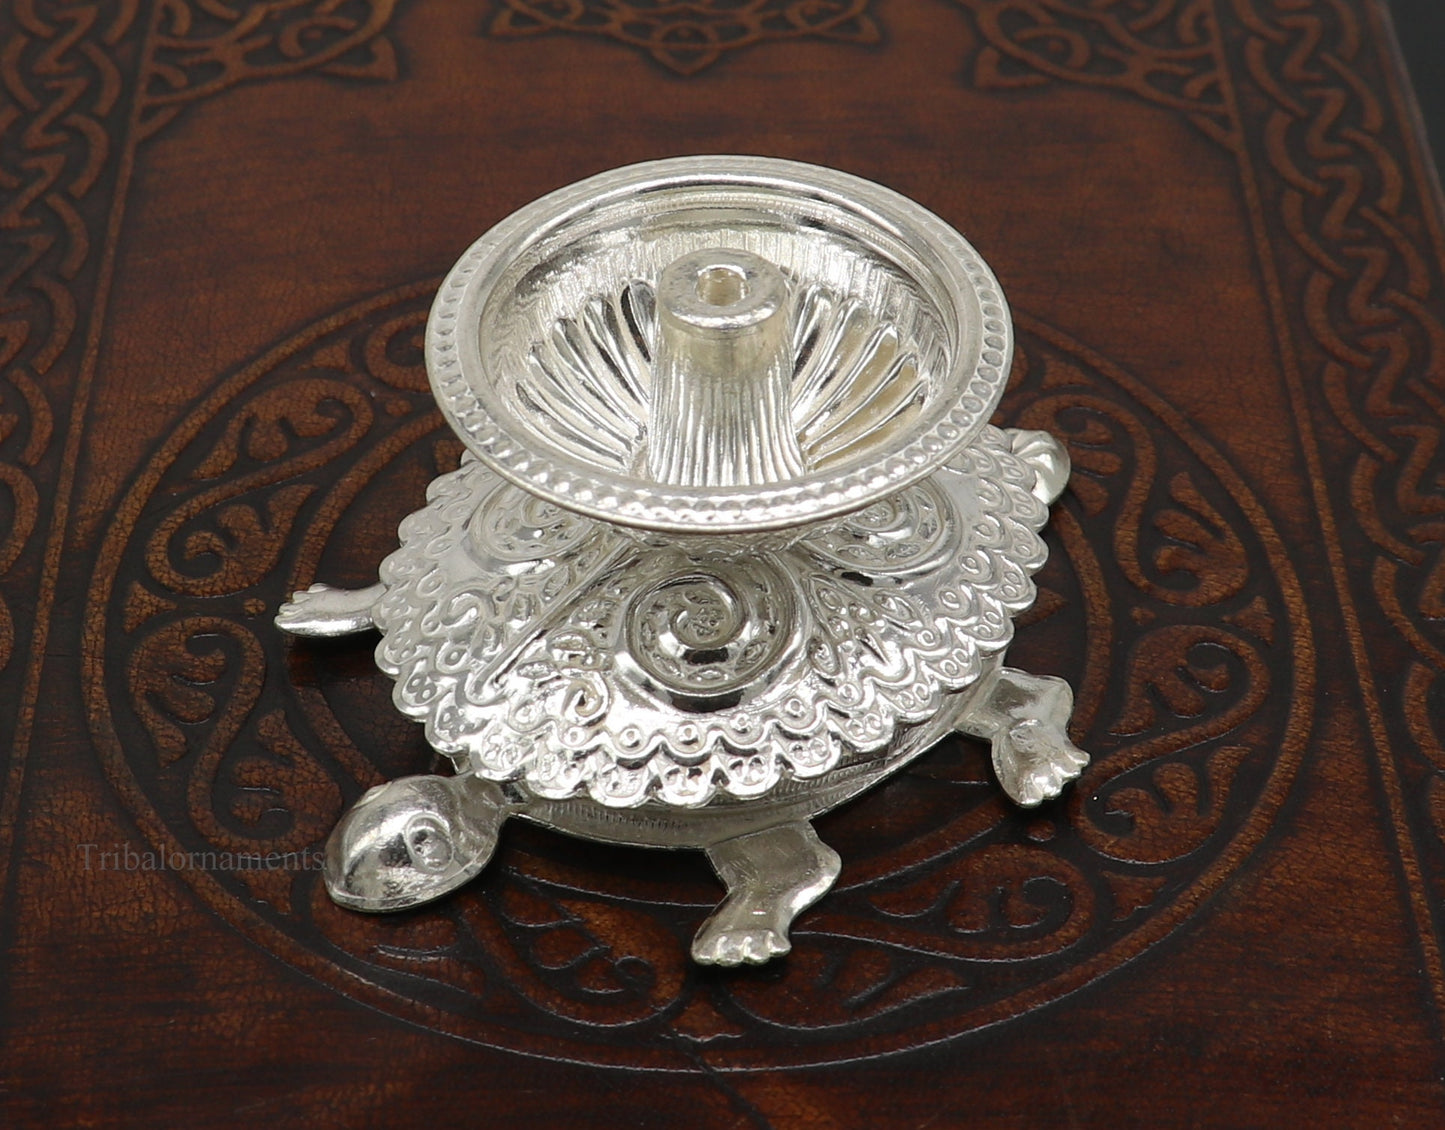 Diwali puja special solid silver handmade tortoise design oil lamp, silver deepak diya, silver temple utensils ,silver puja articles su415 - TRIBAL ORNAMENTS